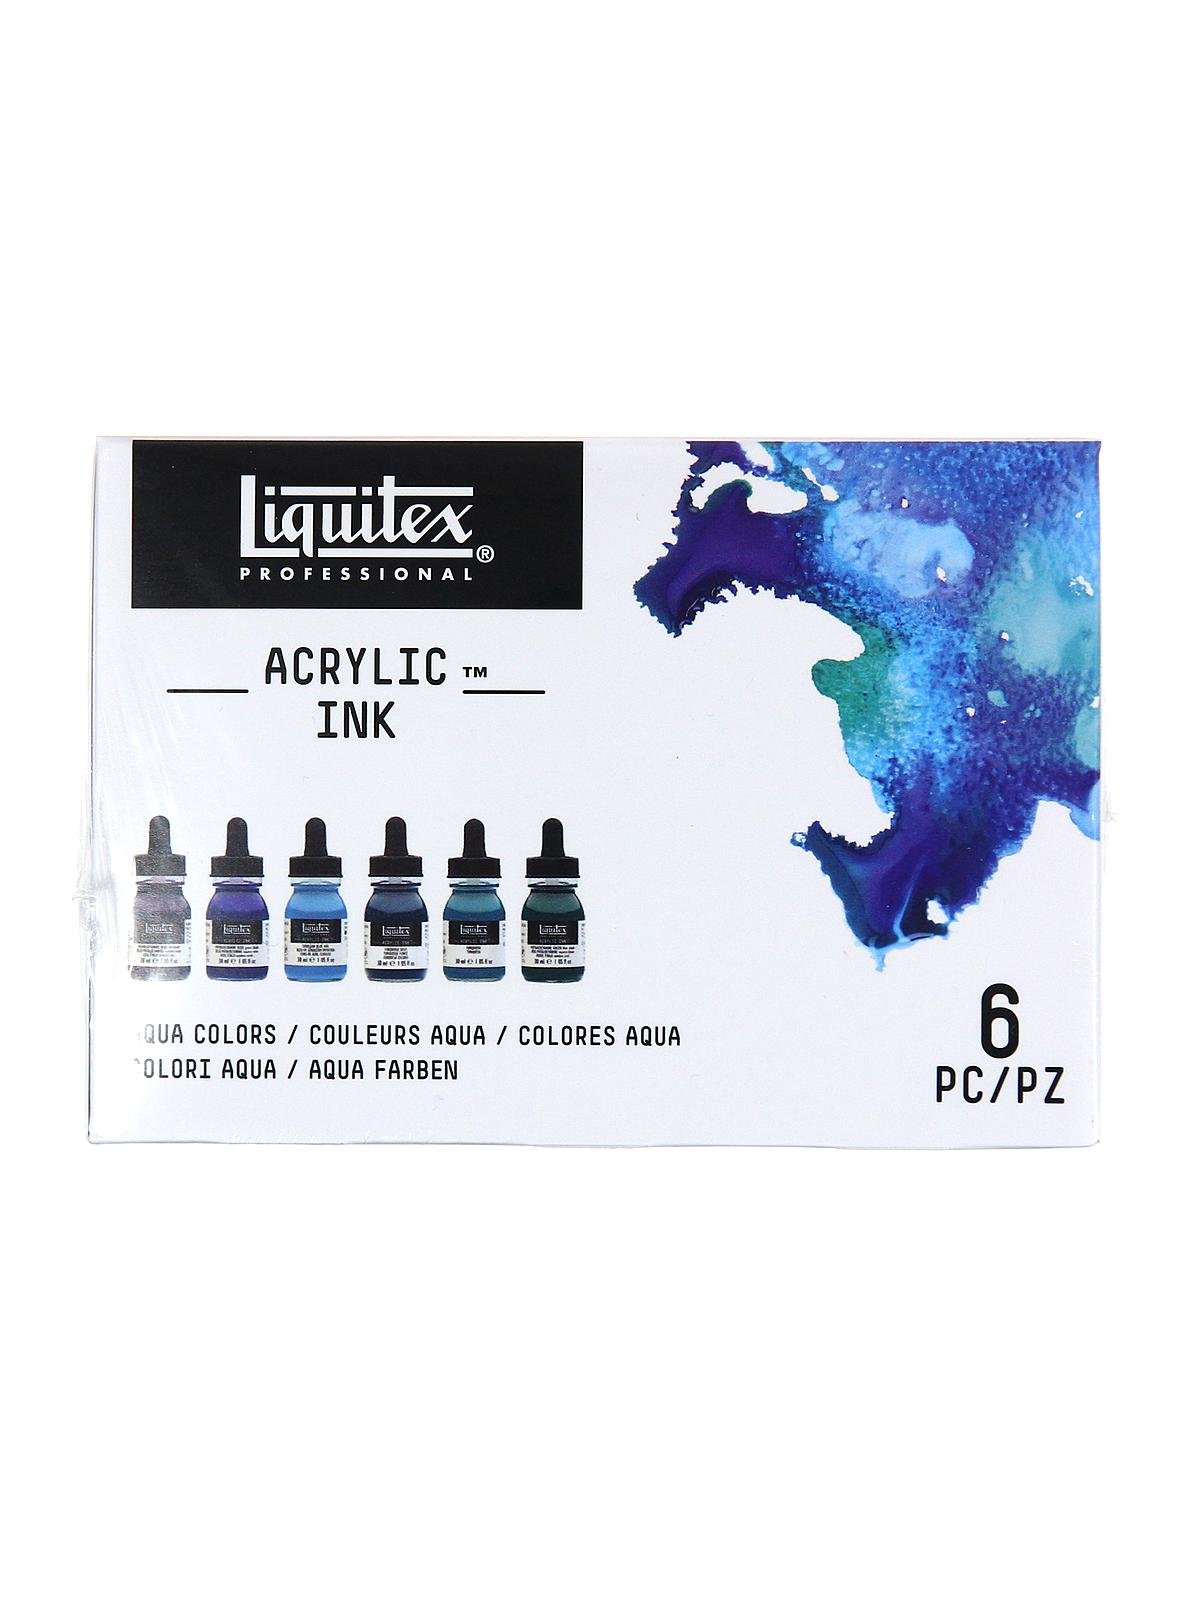 Liquitex Professional Acrylic Ink Pouring Technique Set - Primary Colors